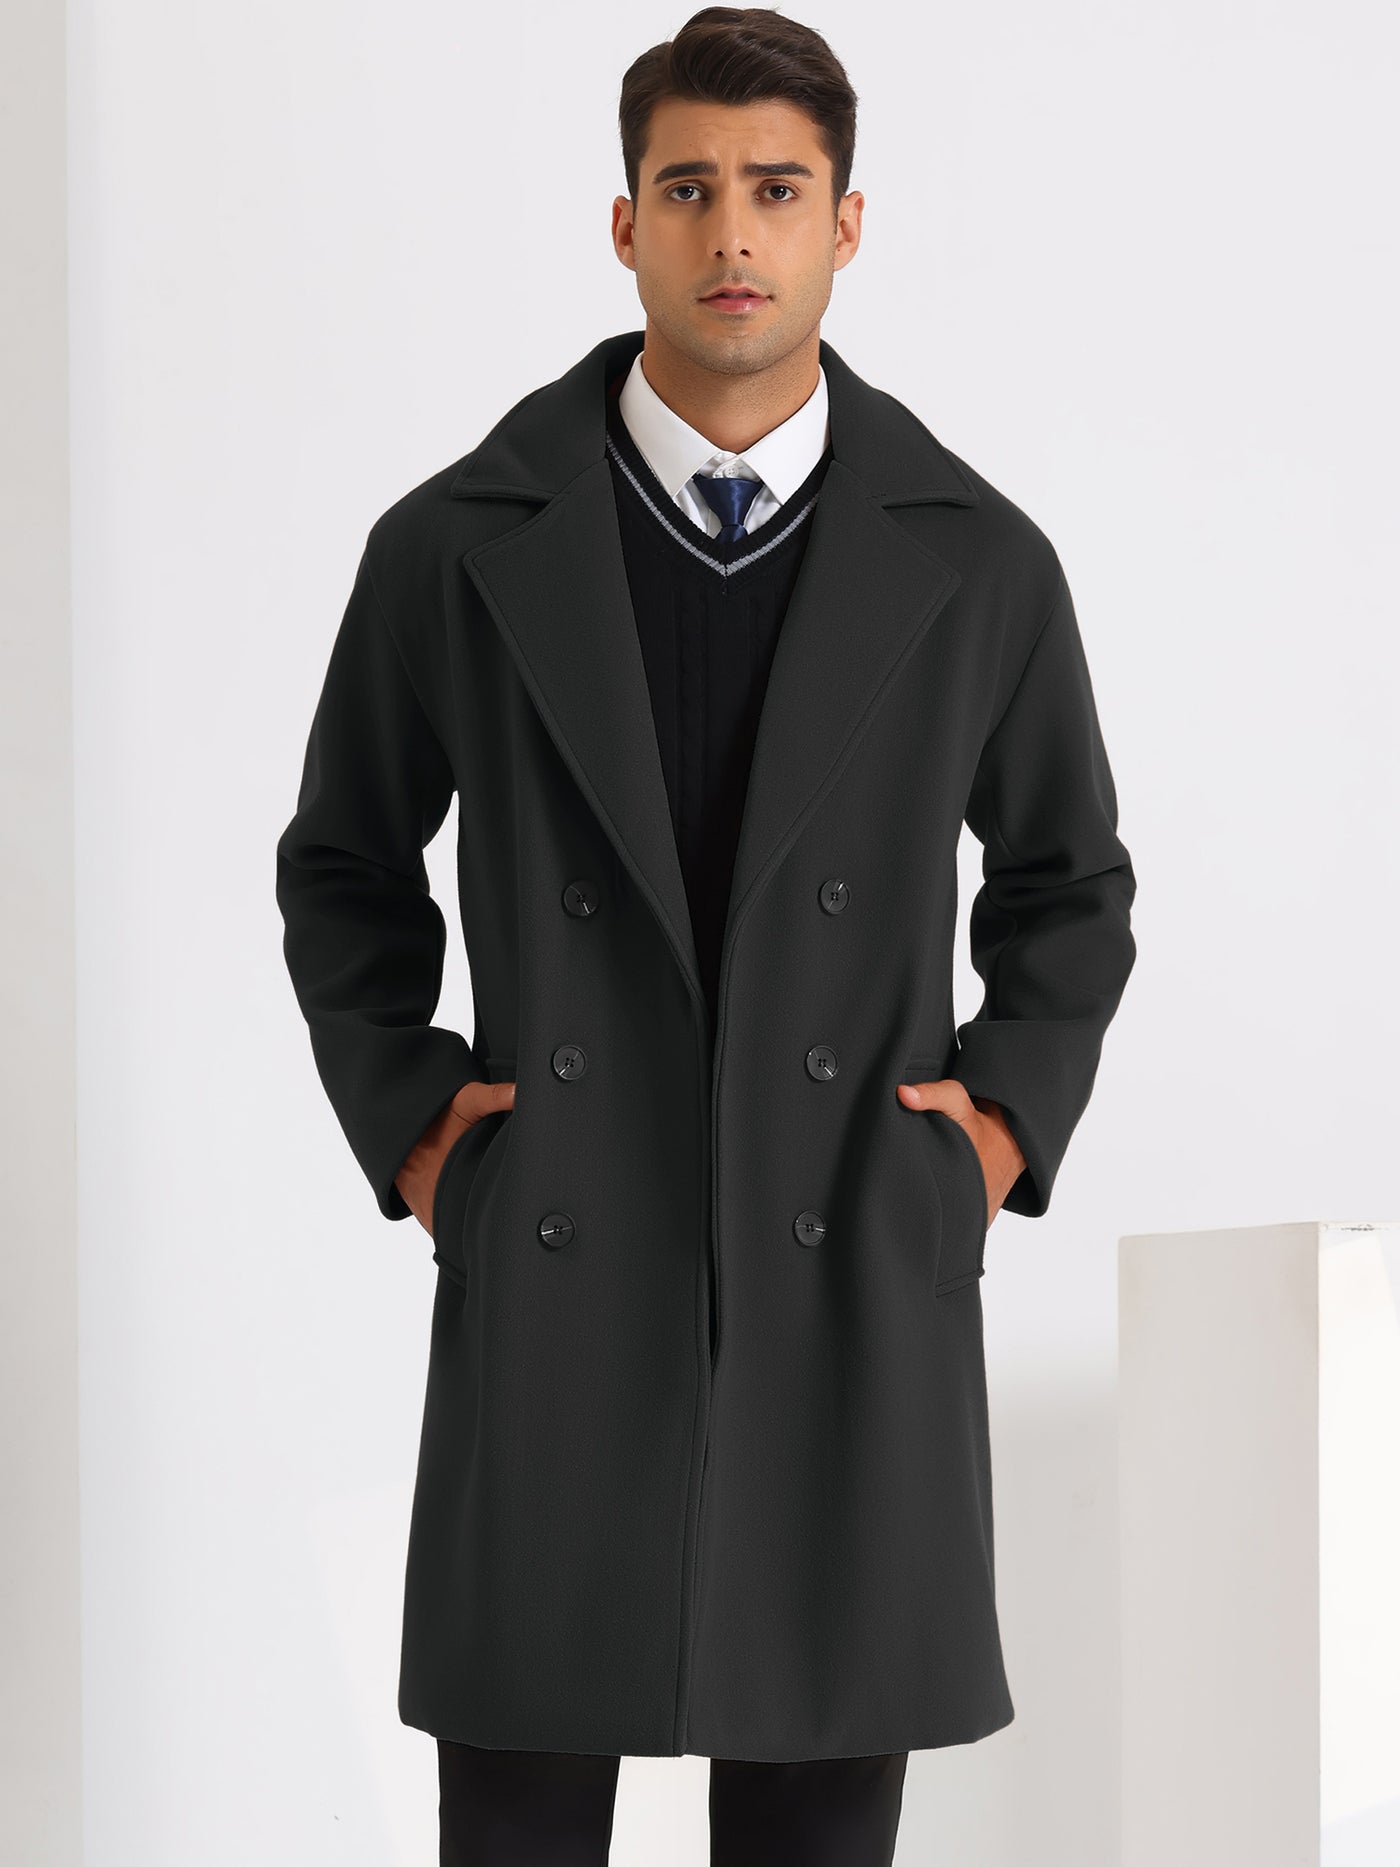 Bublédon Notch Lapel Long Coat Men's Classic Solid Color Double Breasted Overcoat